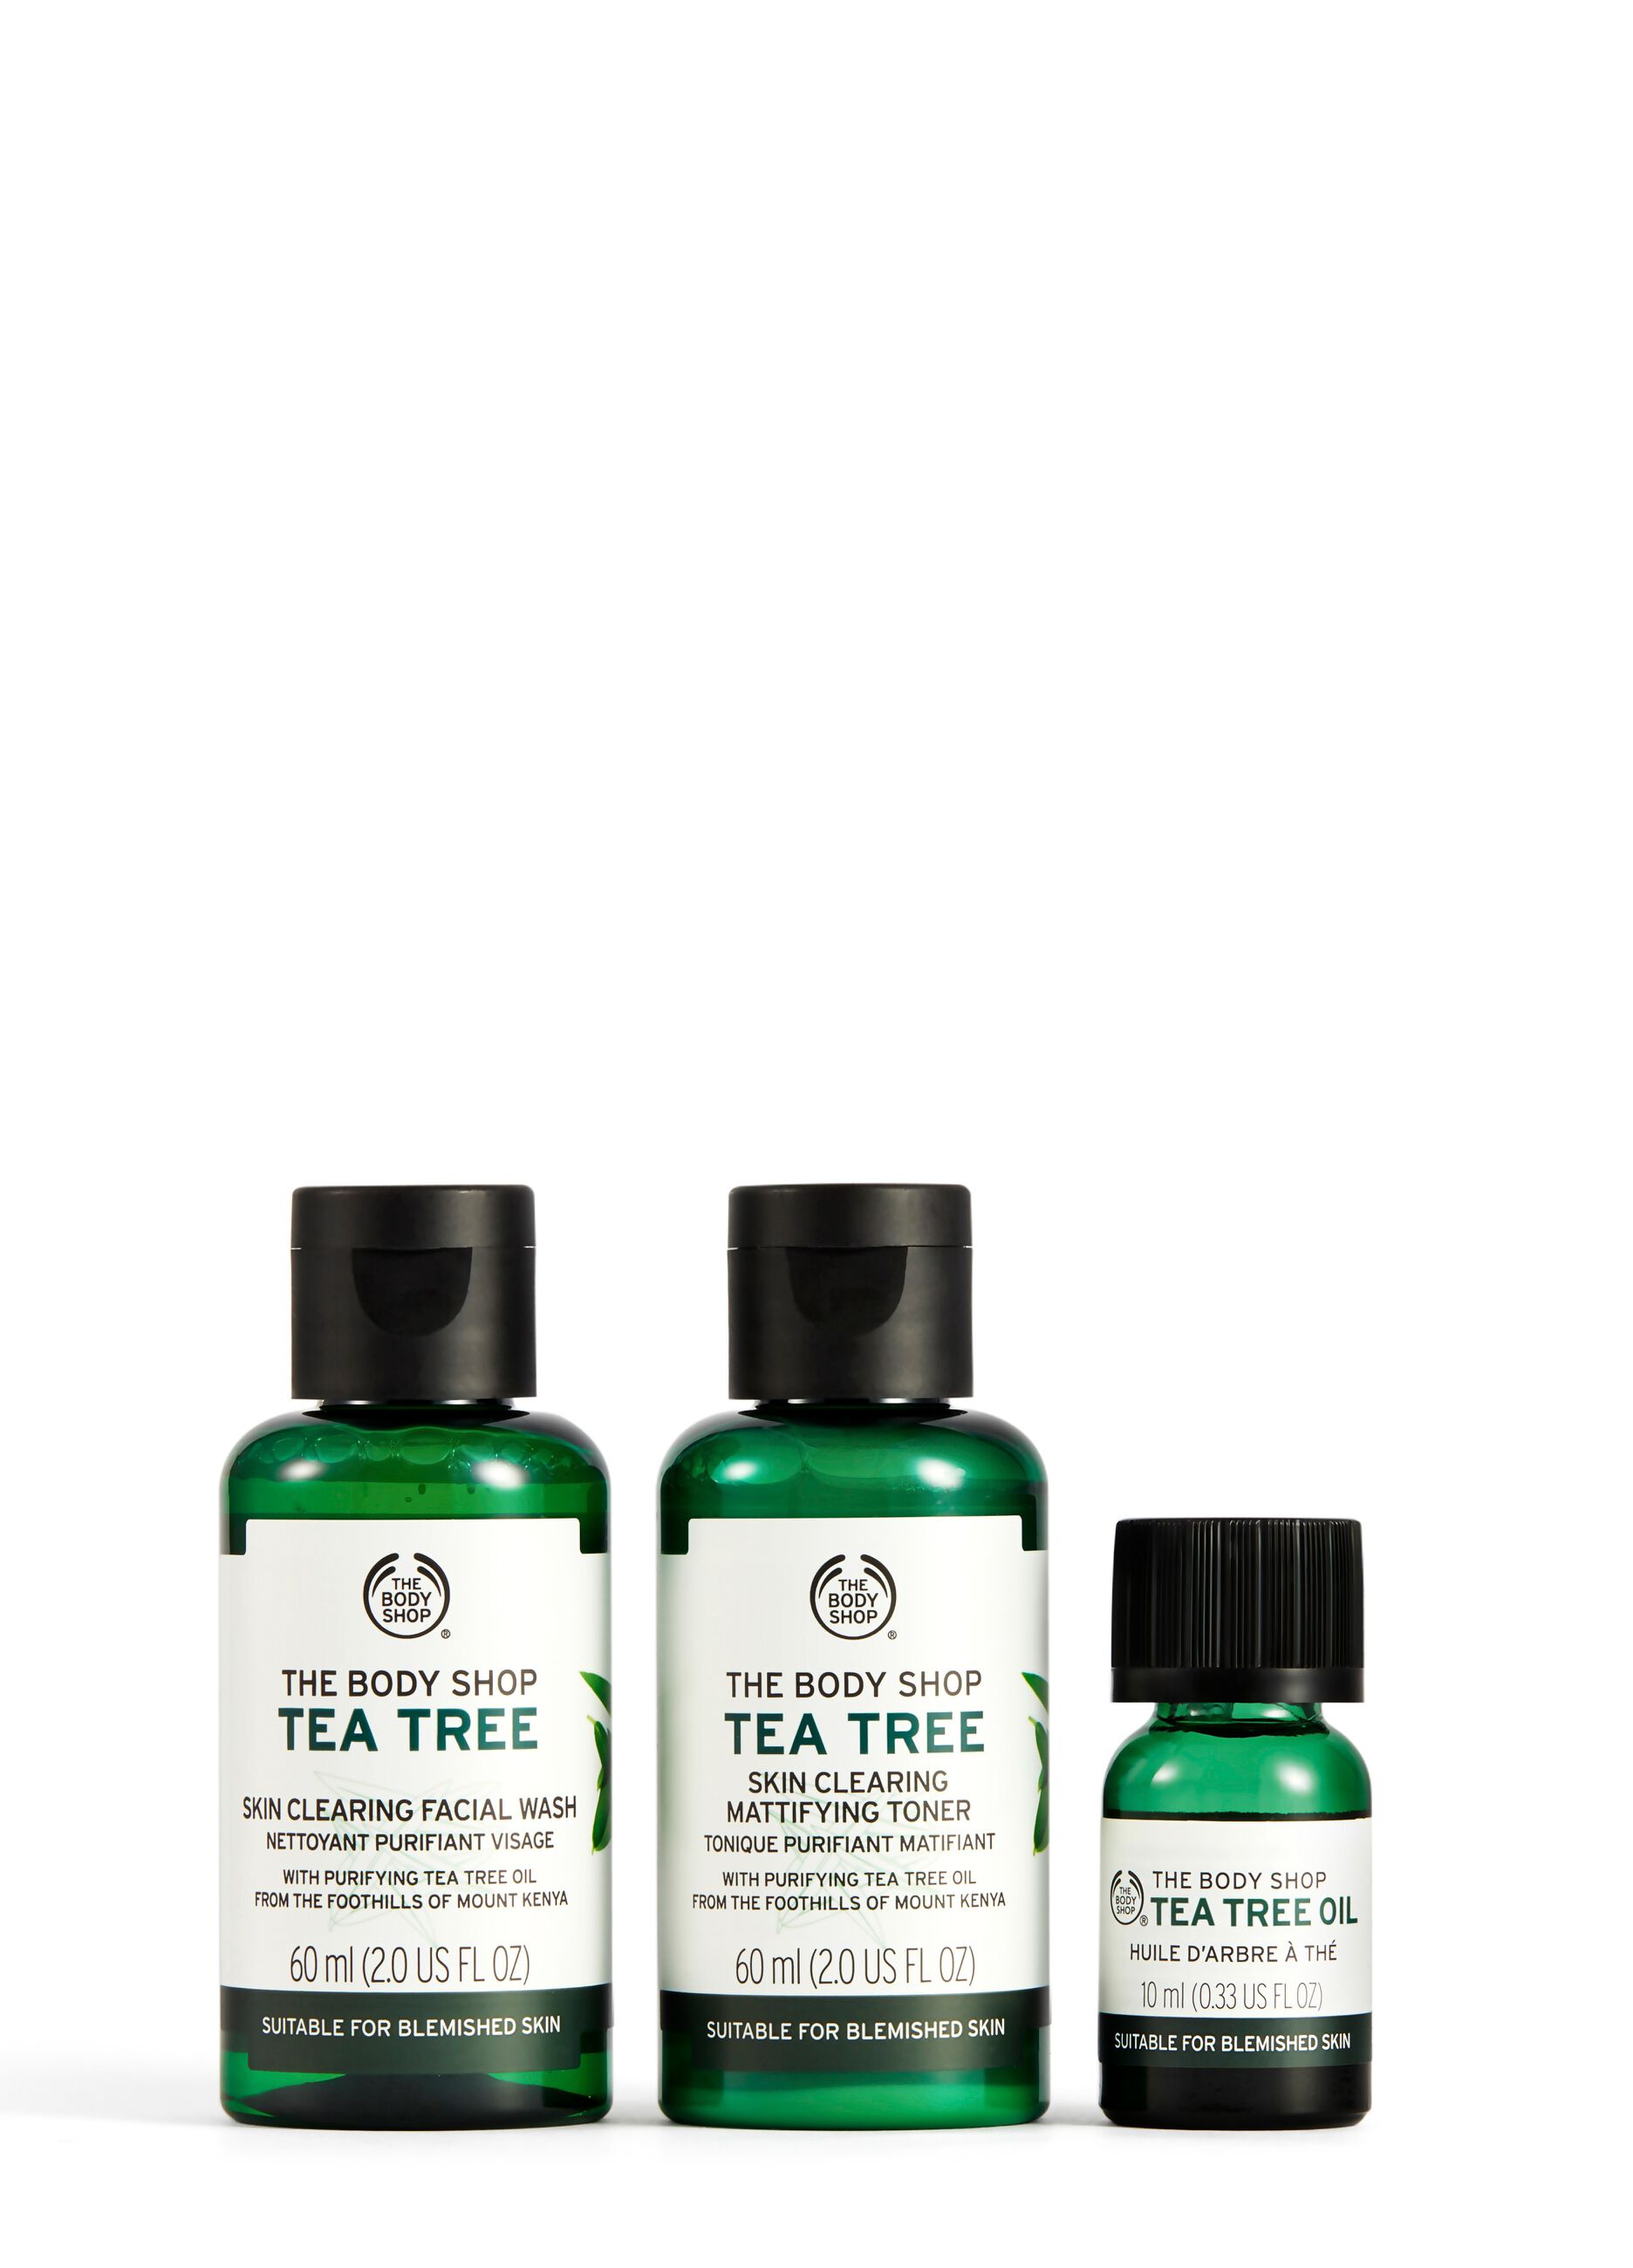 The Body Shop Tea Tree face care gift bag